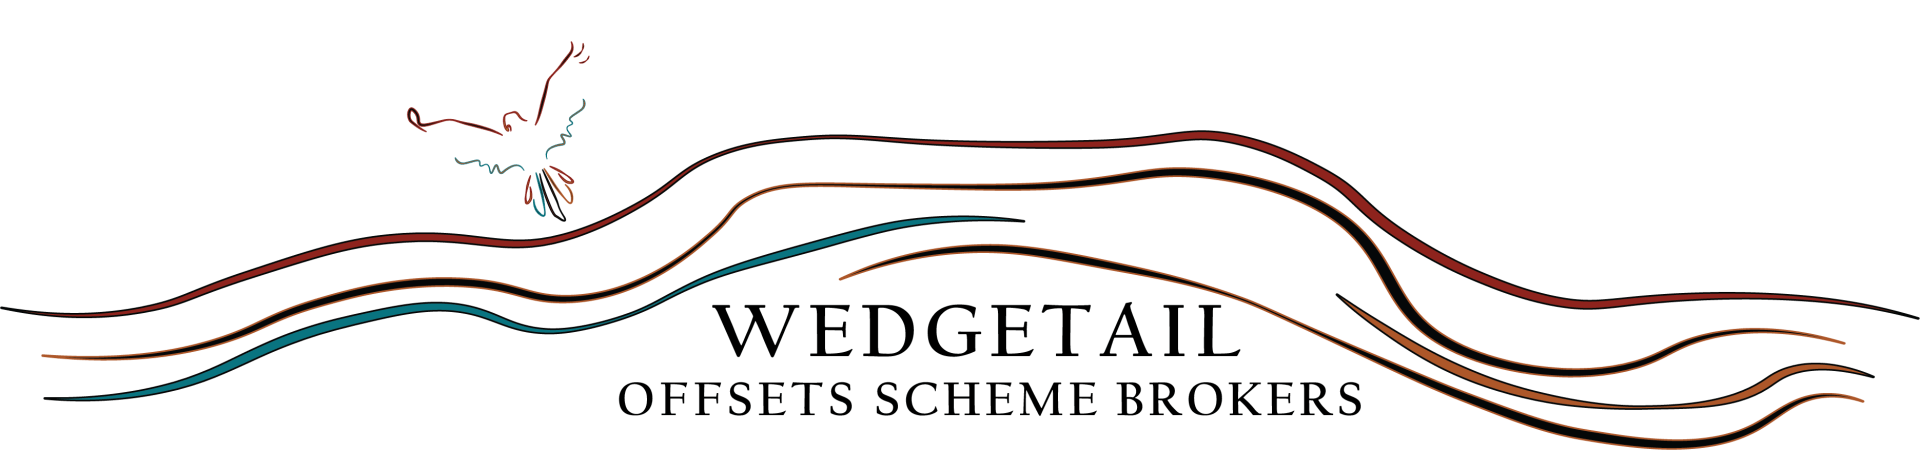 Wedgetail offset scheme brokers logo